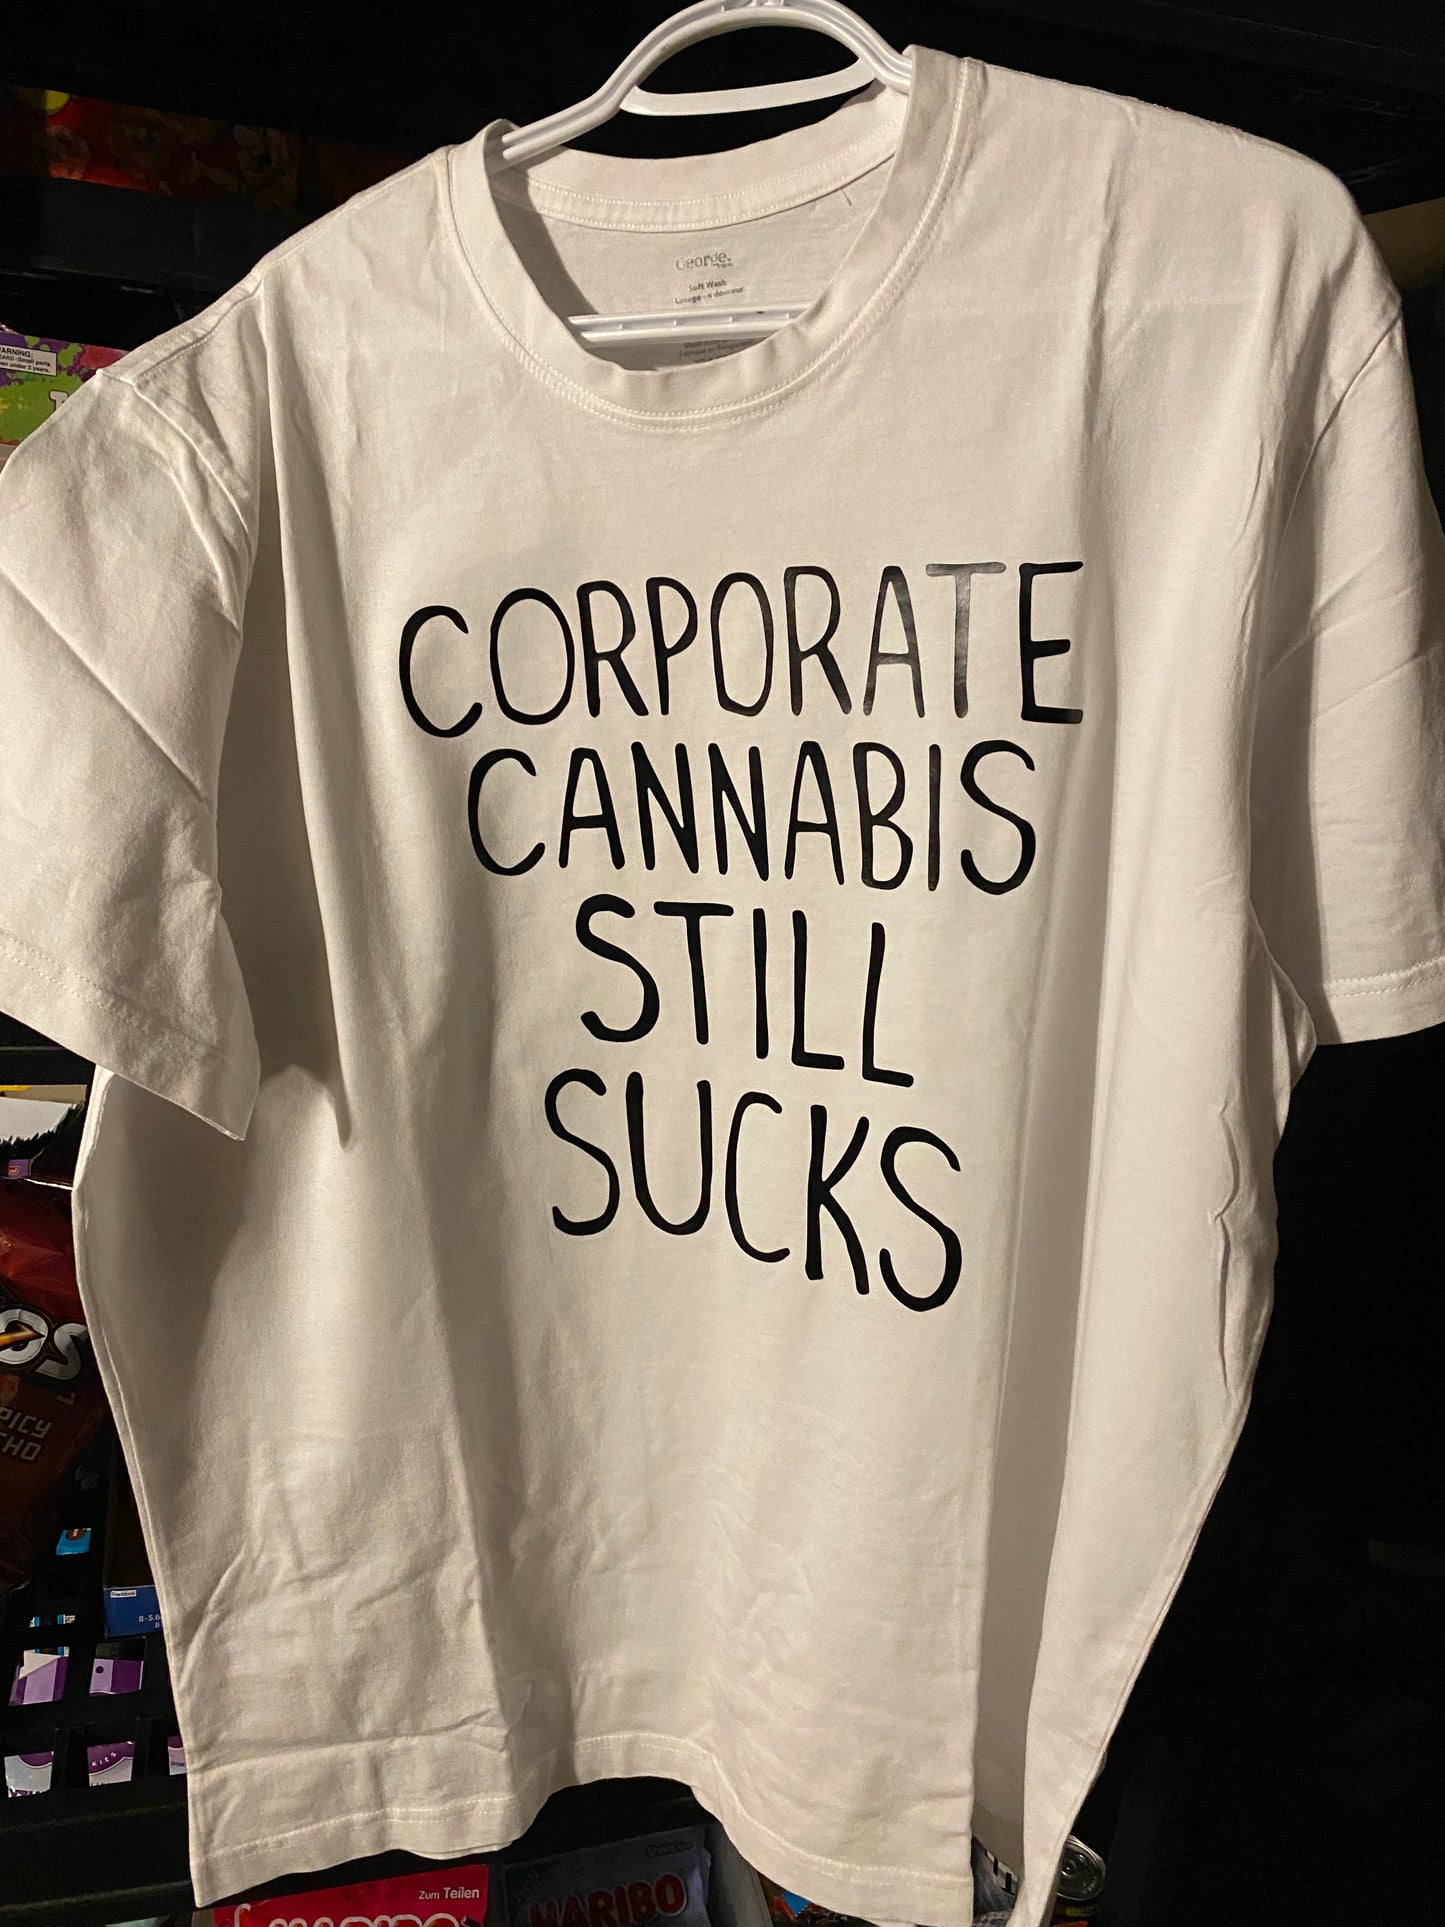 Corporate Cannabis Shirt